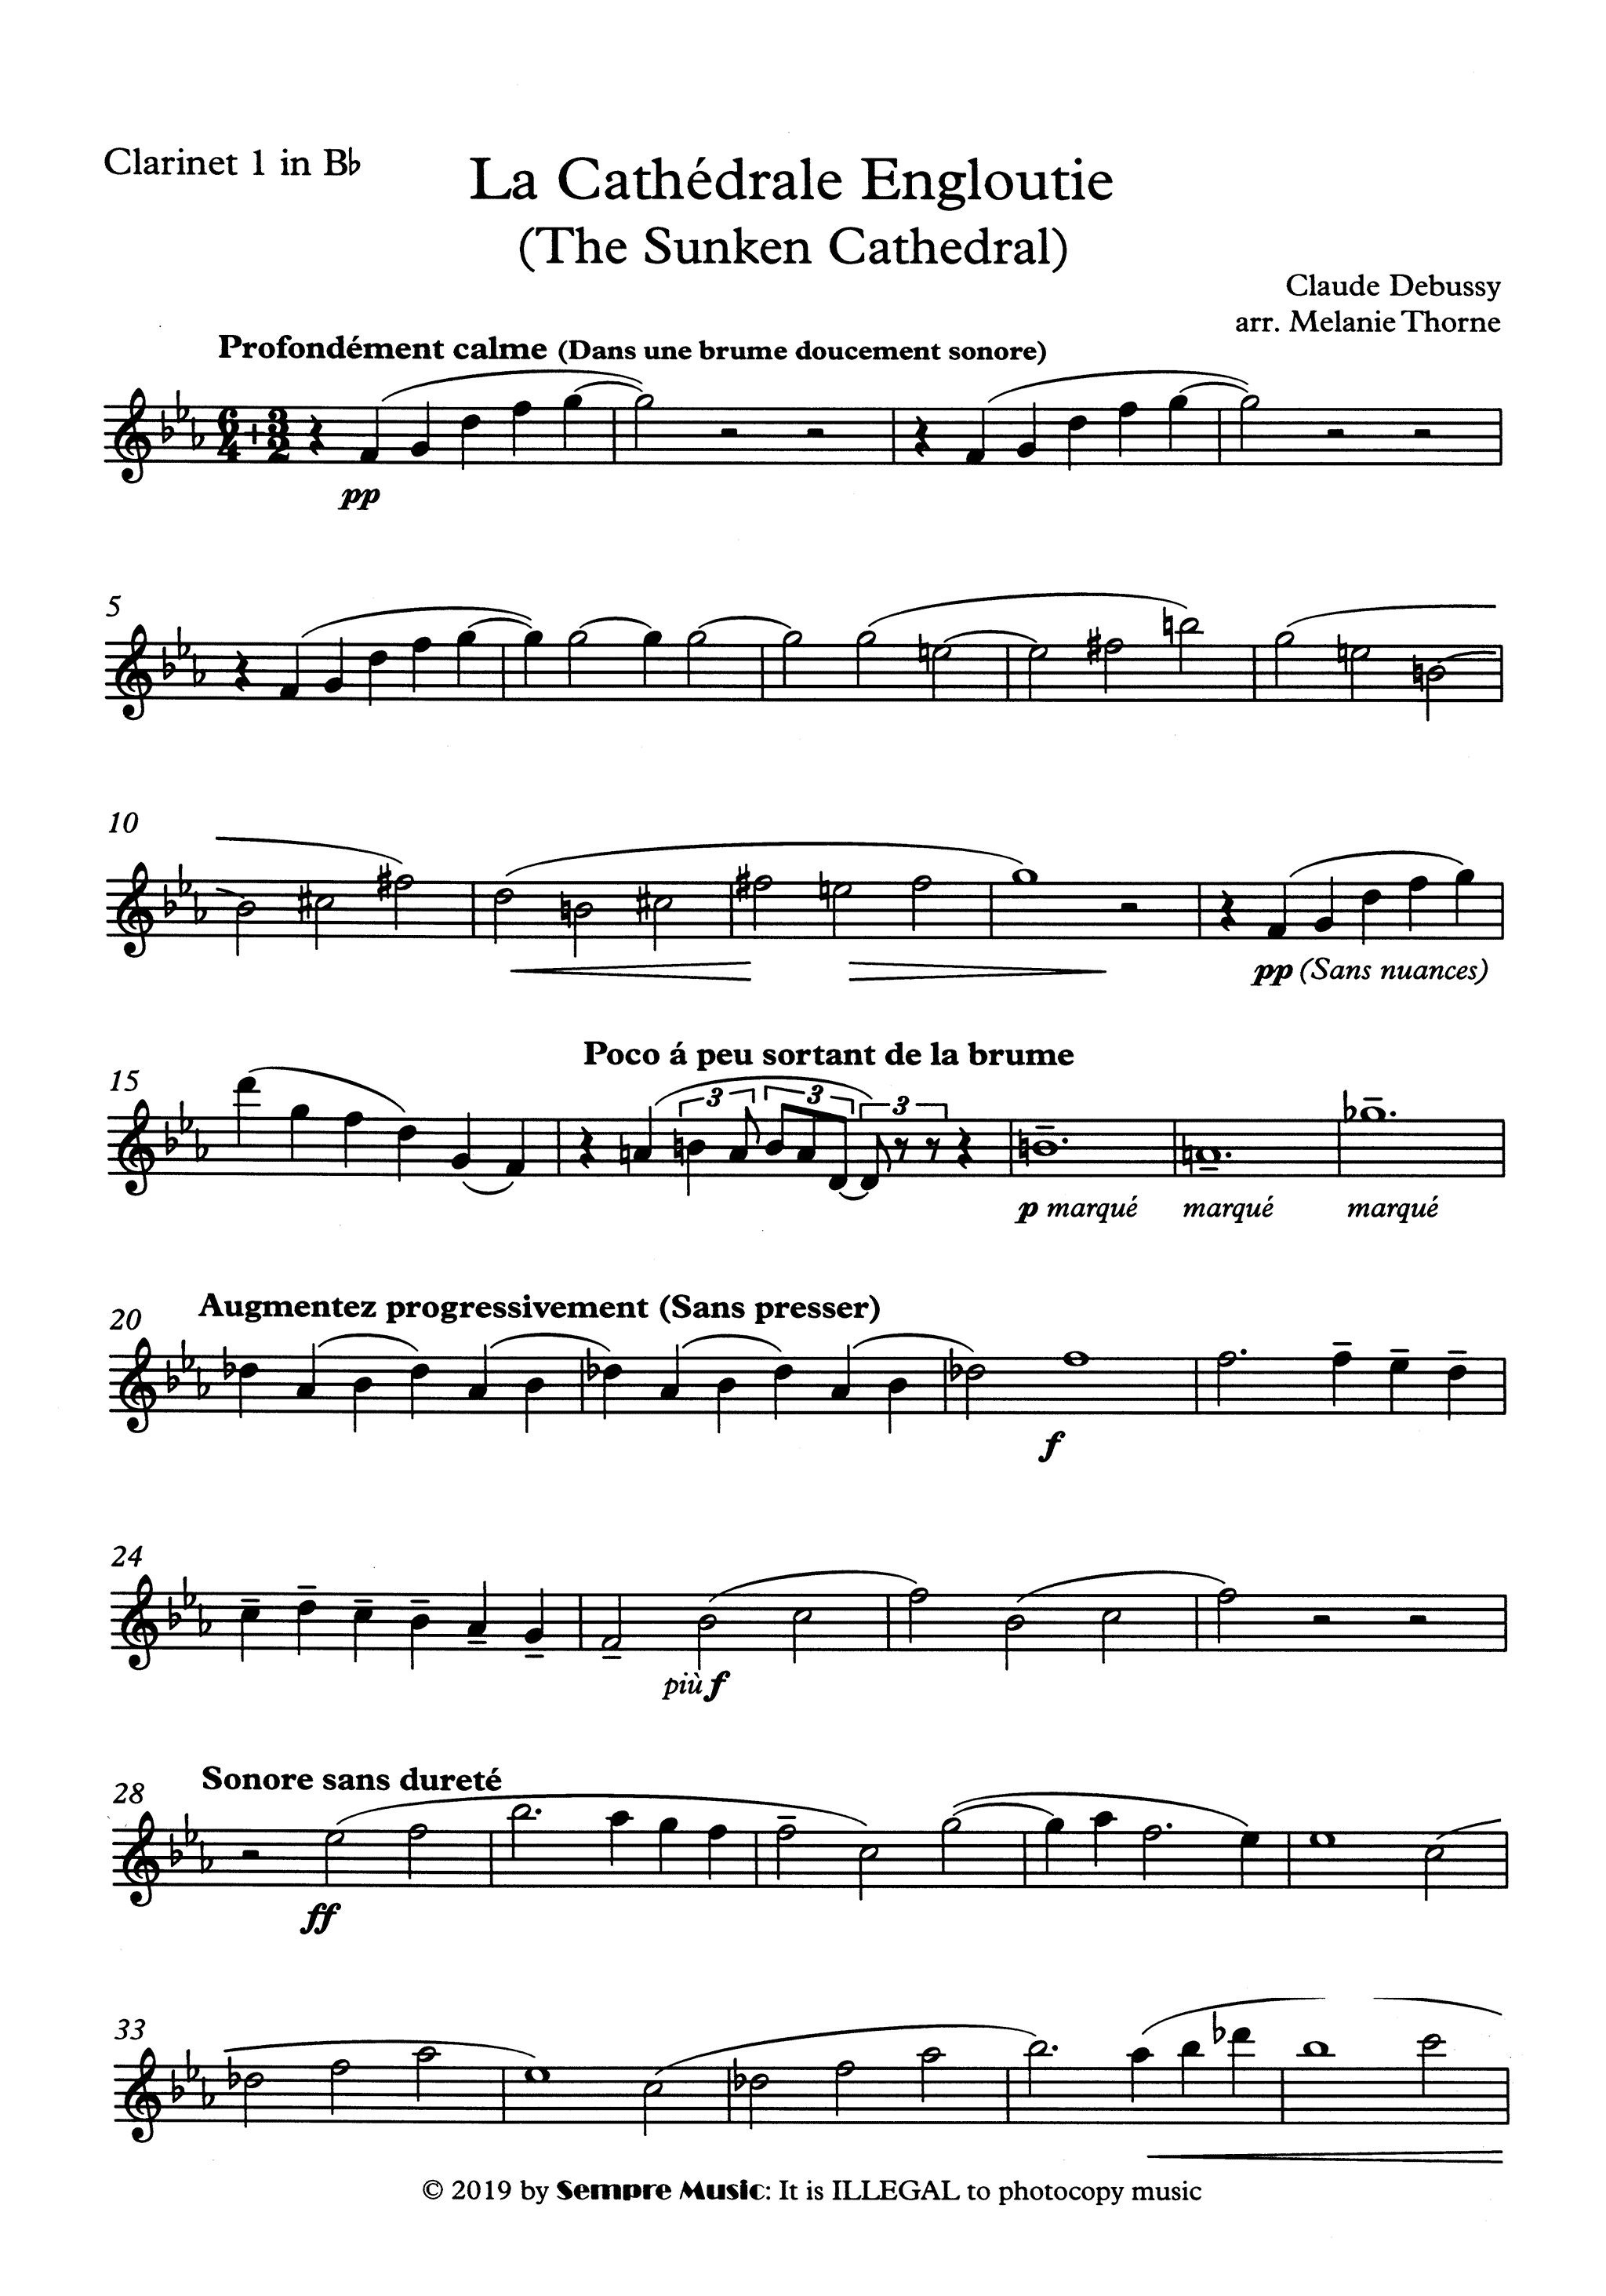 La Cathédrale engloutie (Sunken Cathedral) First B-flat clarinet part